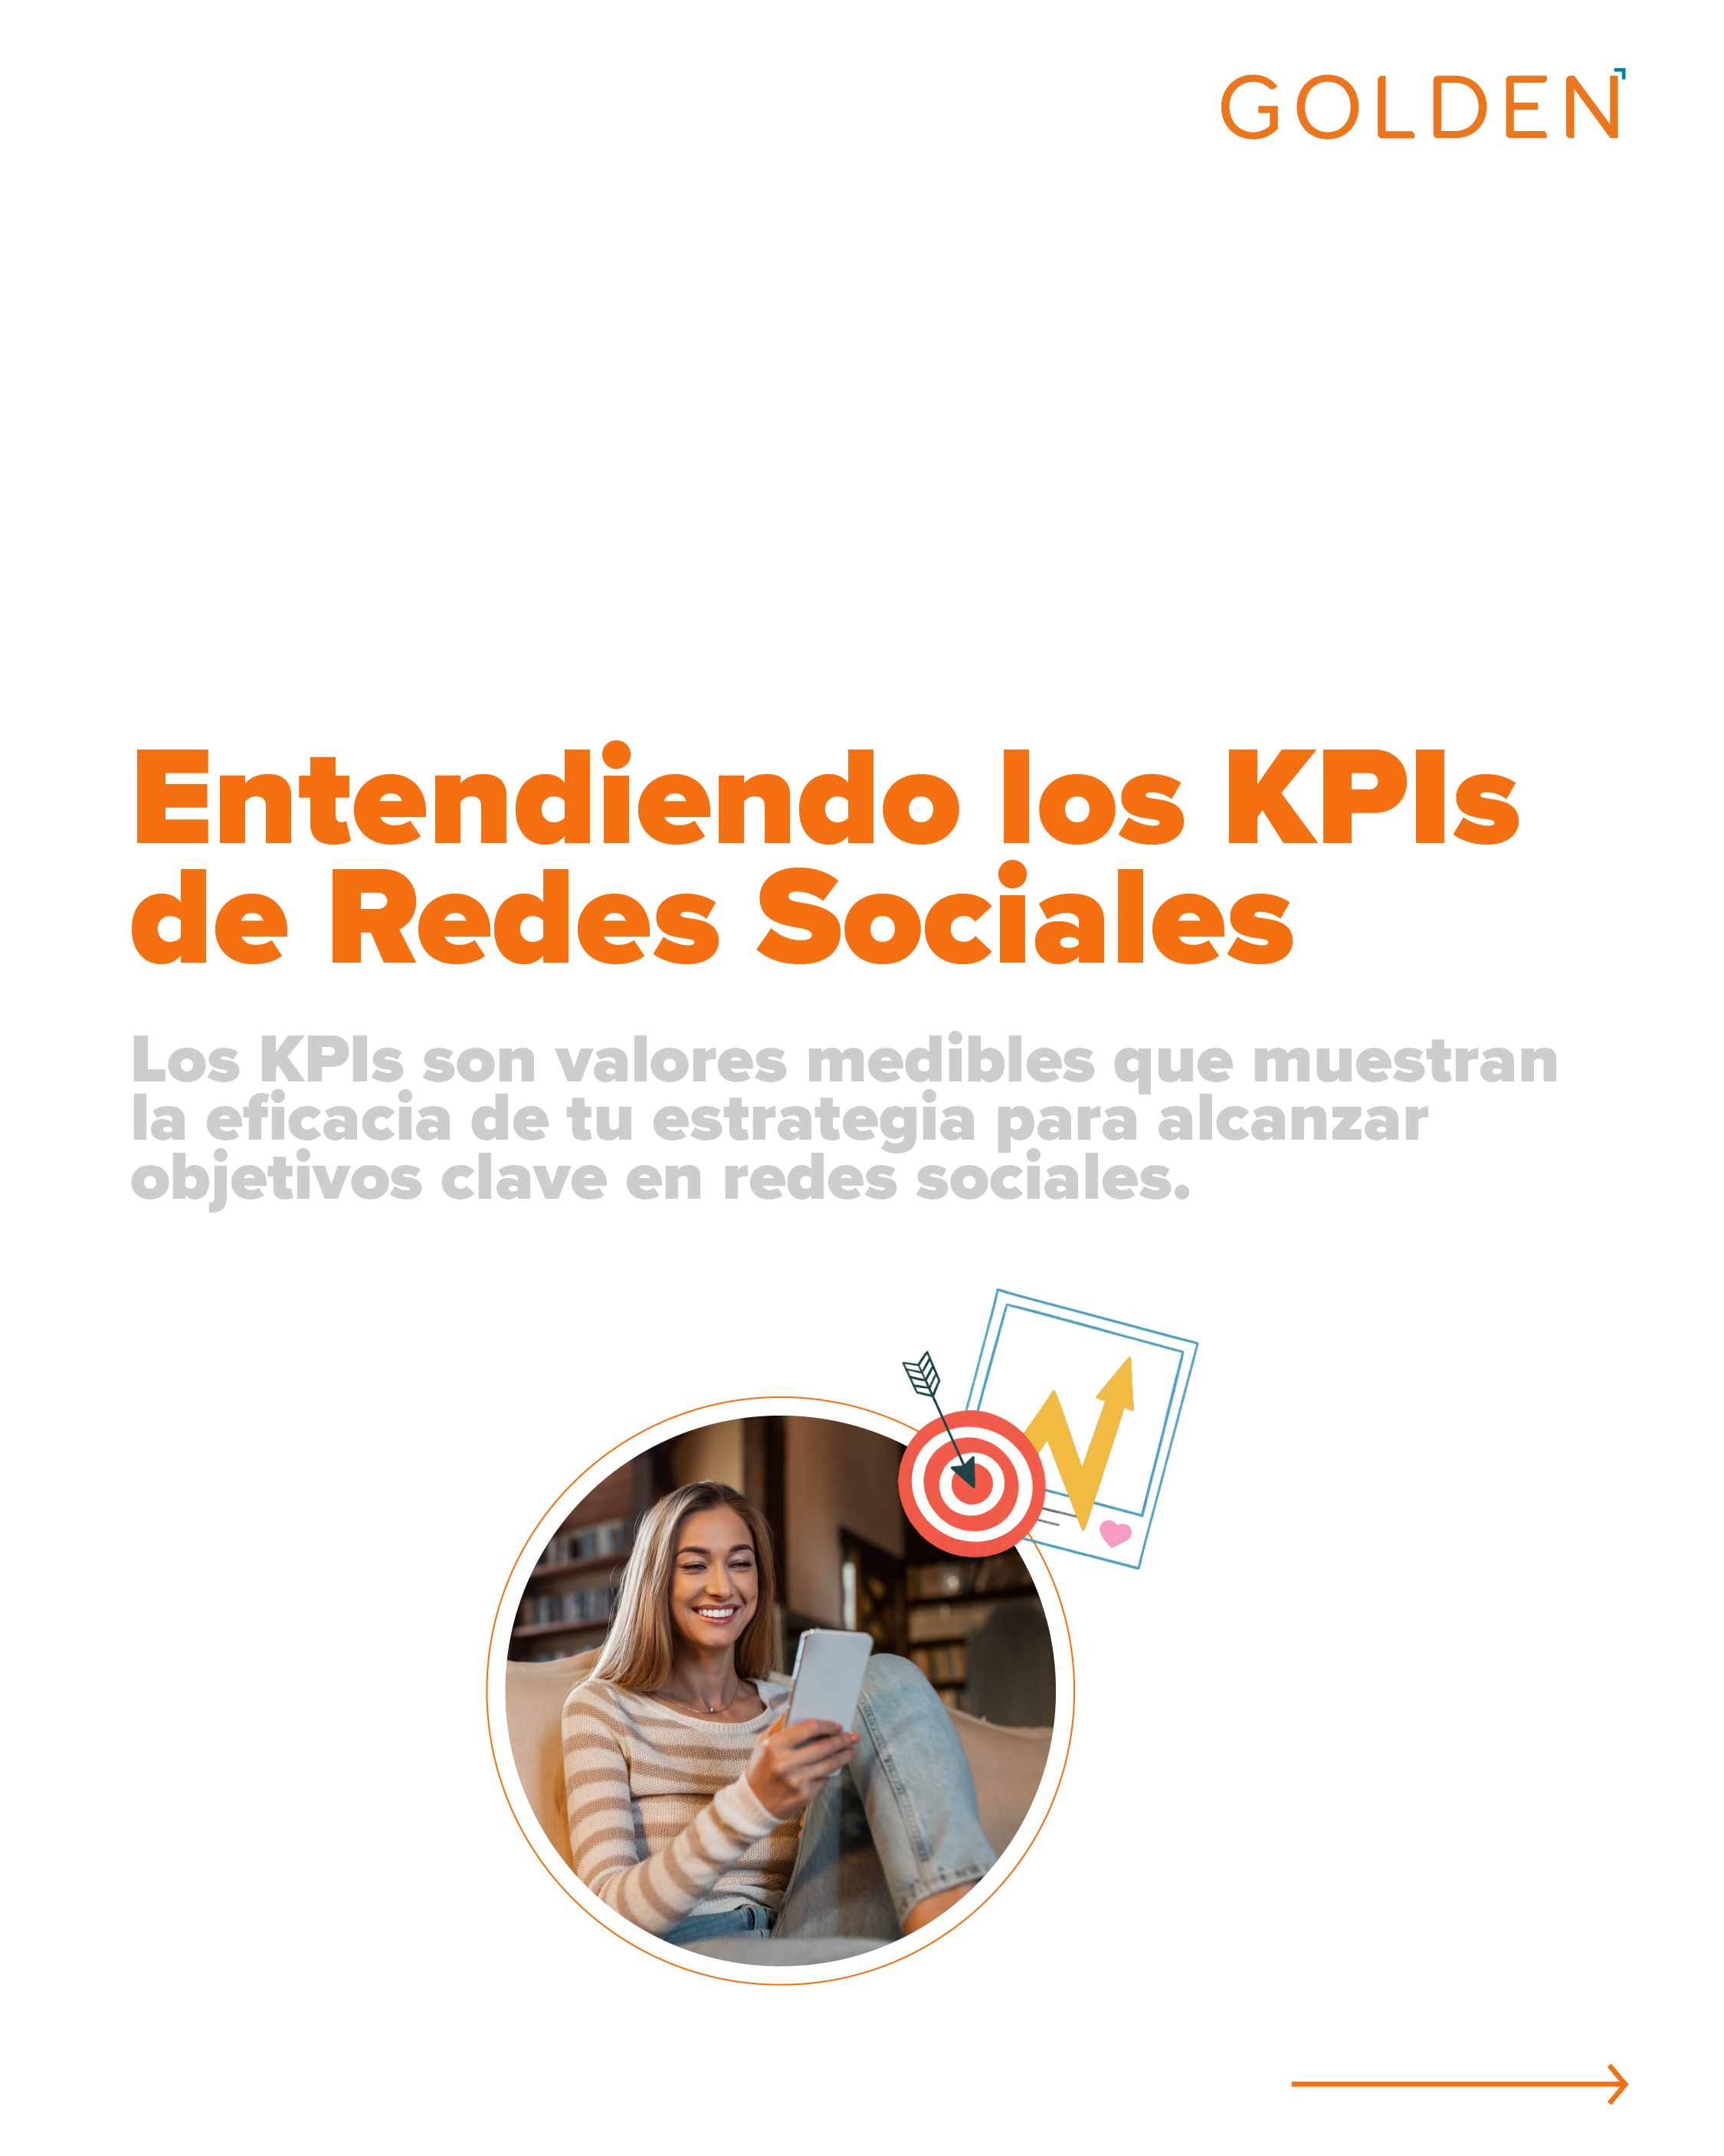 KPIs en Redes Sociales